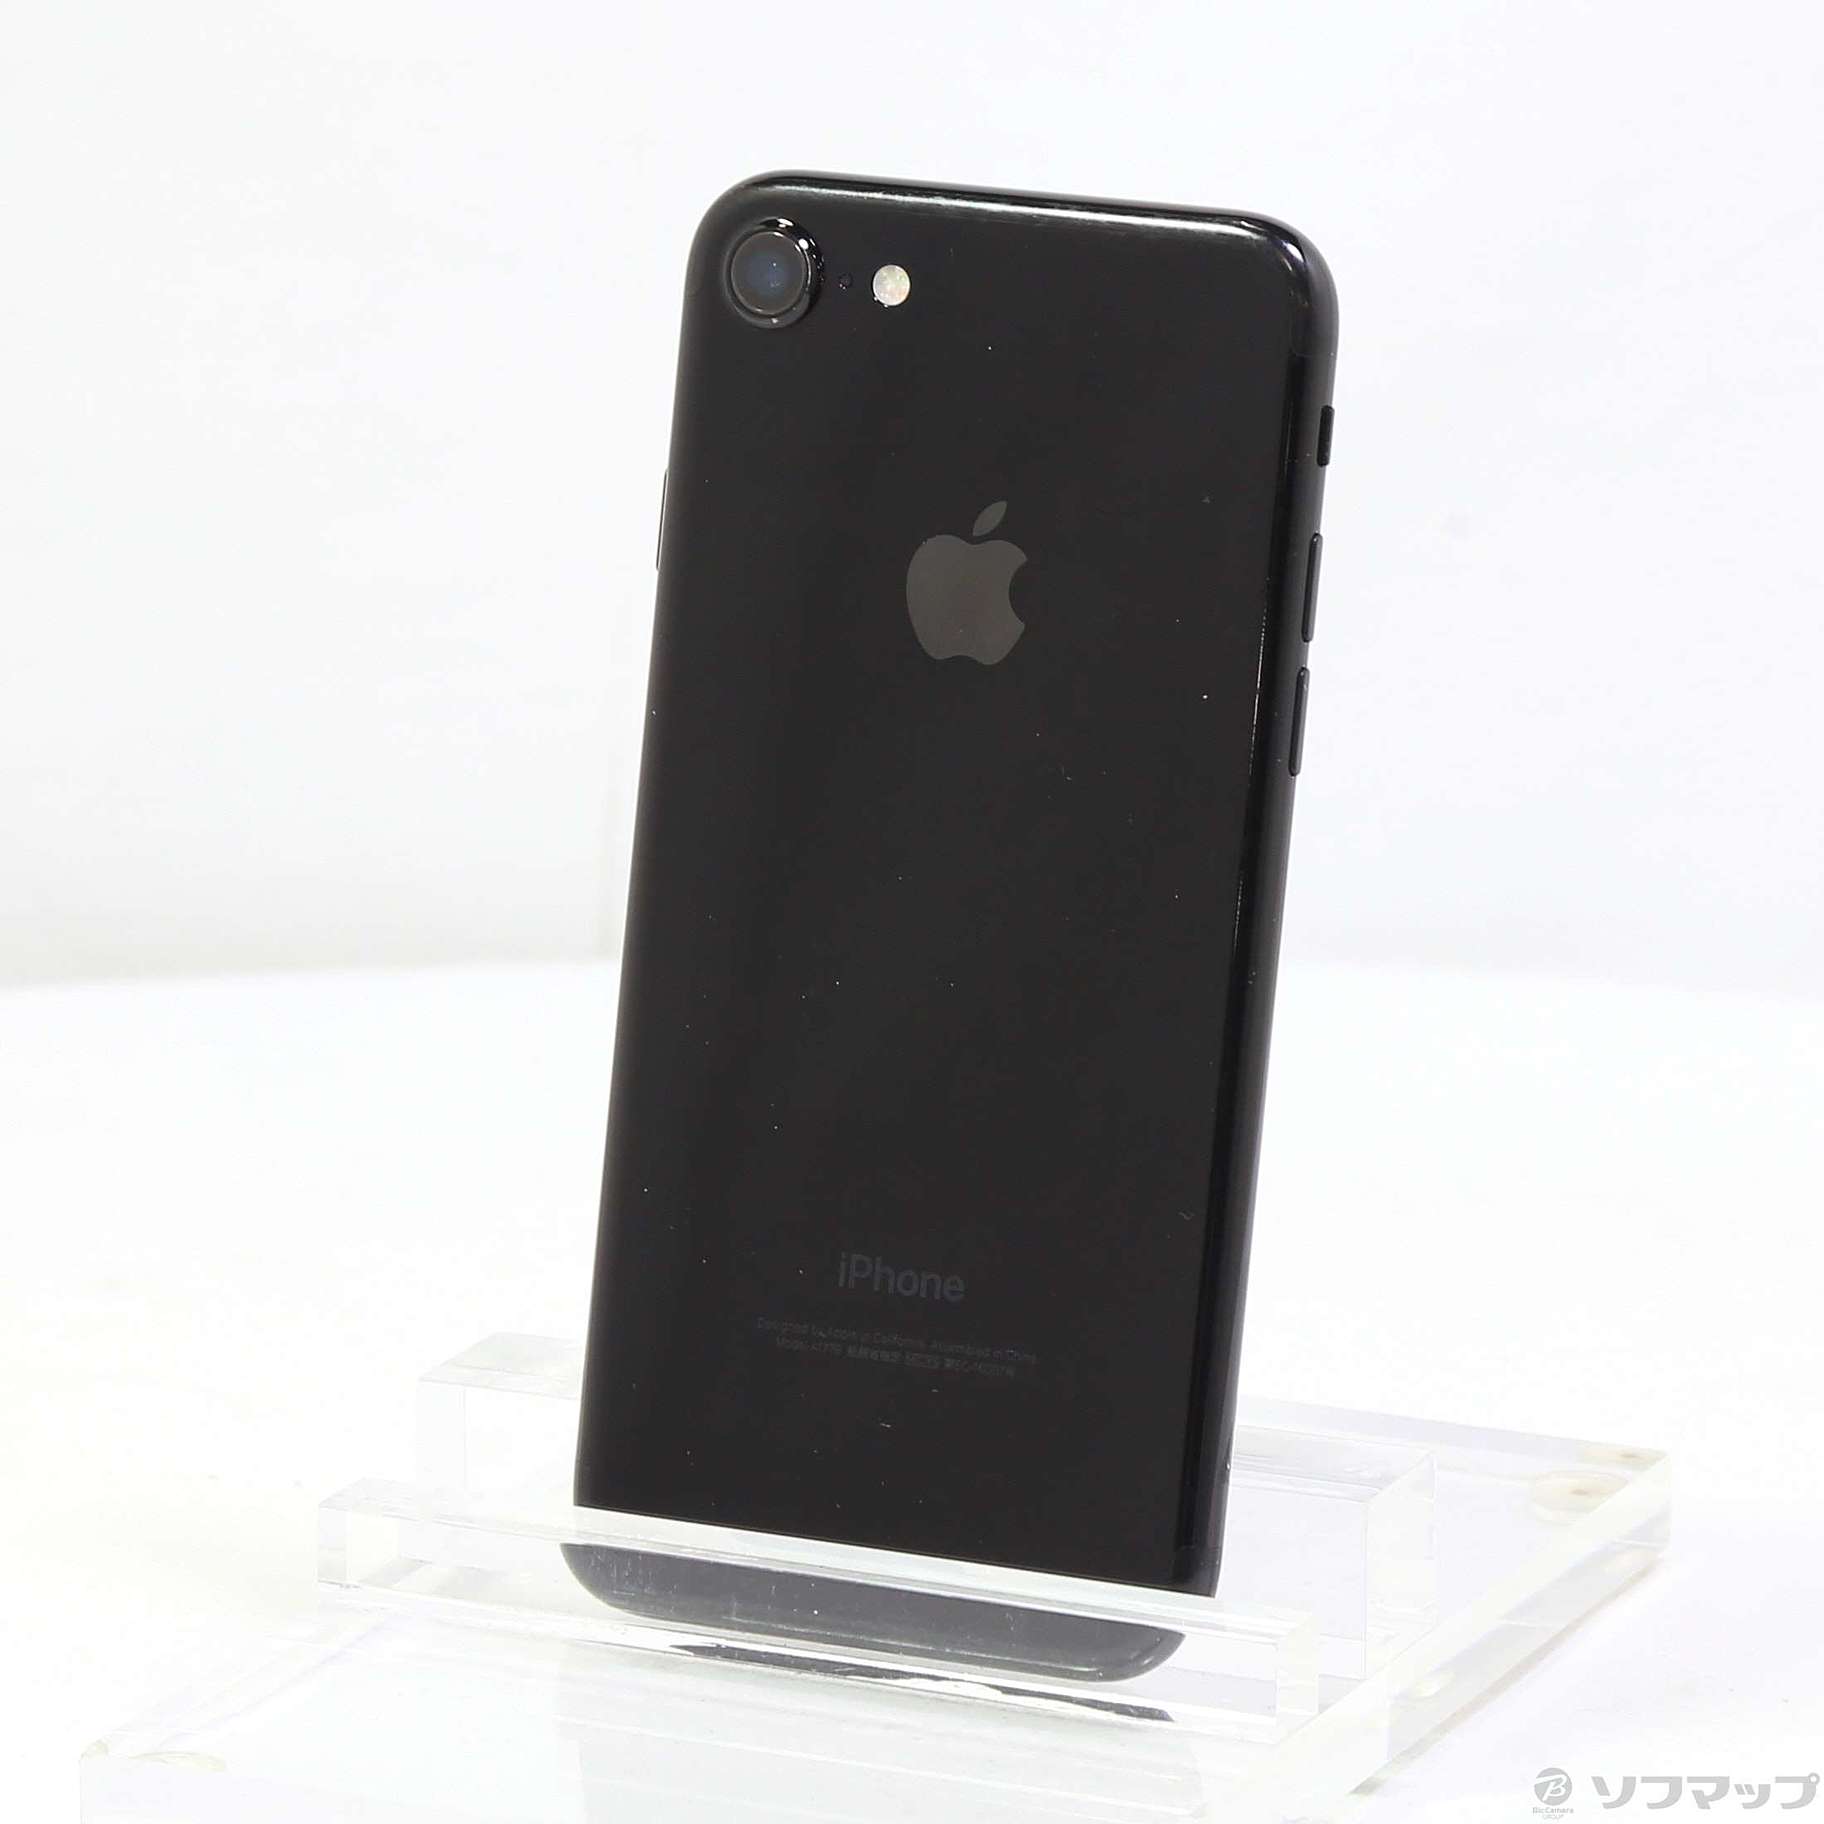 iPhone 7 Jet Black 128 GB Softbankスマートフォン本体